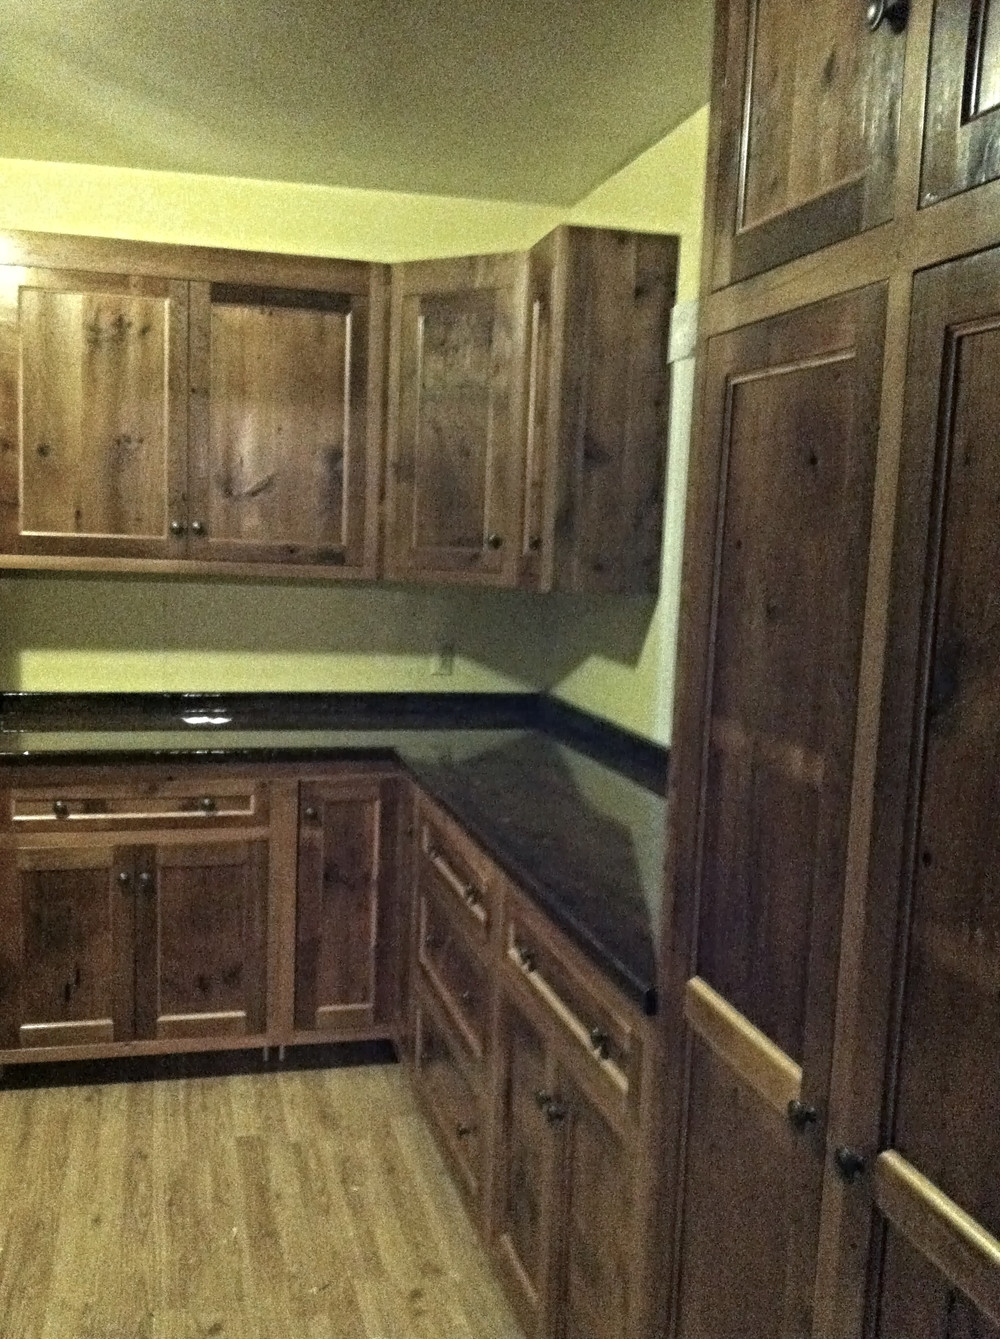 Barn Wood Kitchen Cabinets
 Reclaimed Barnwood Kitchen Cabinets — Barn Wood Furniture